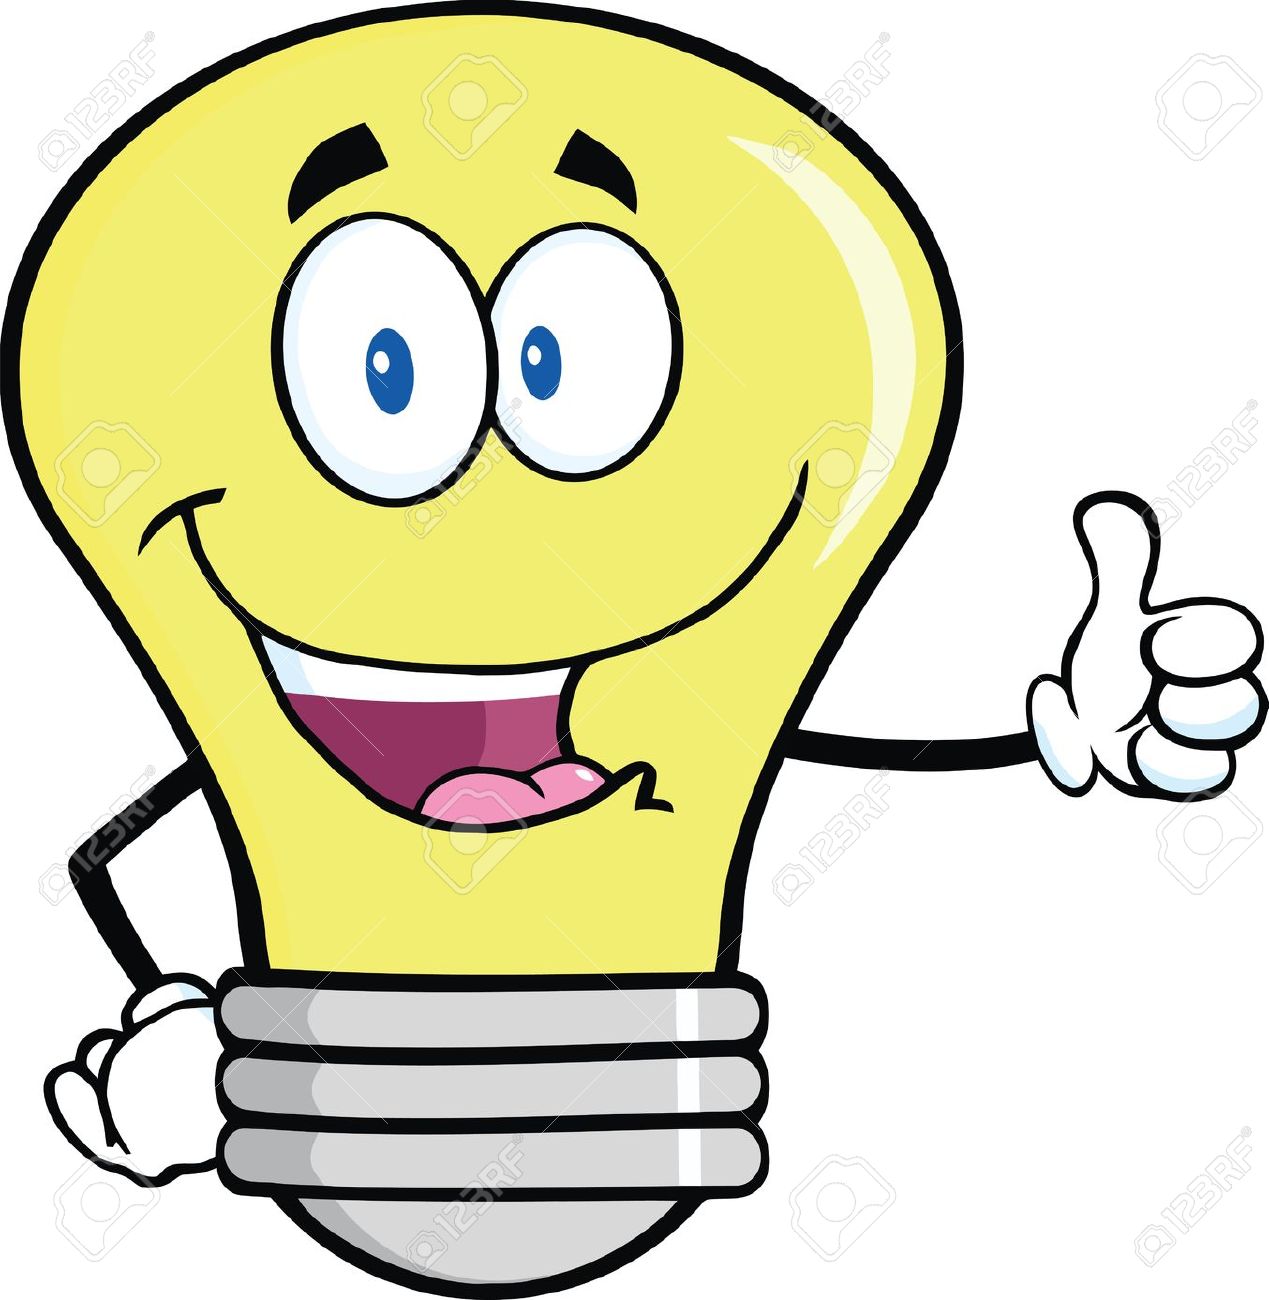 light bulb idea: Light Bulb Cartoon Mascot Character Giving A Thumb Up